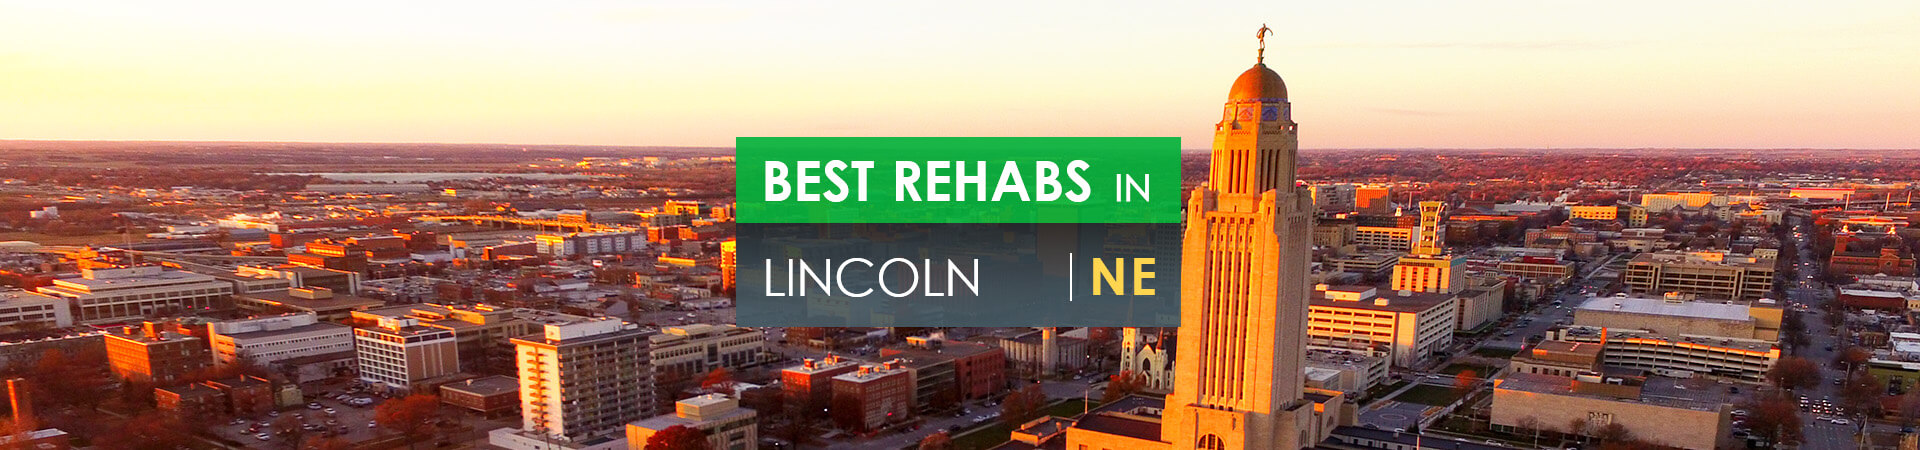 Best rehabs in Lincoln, NE